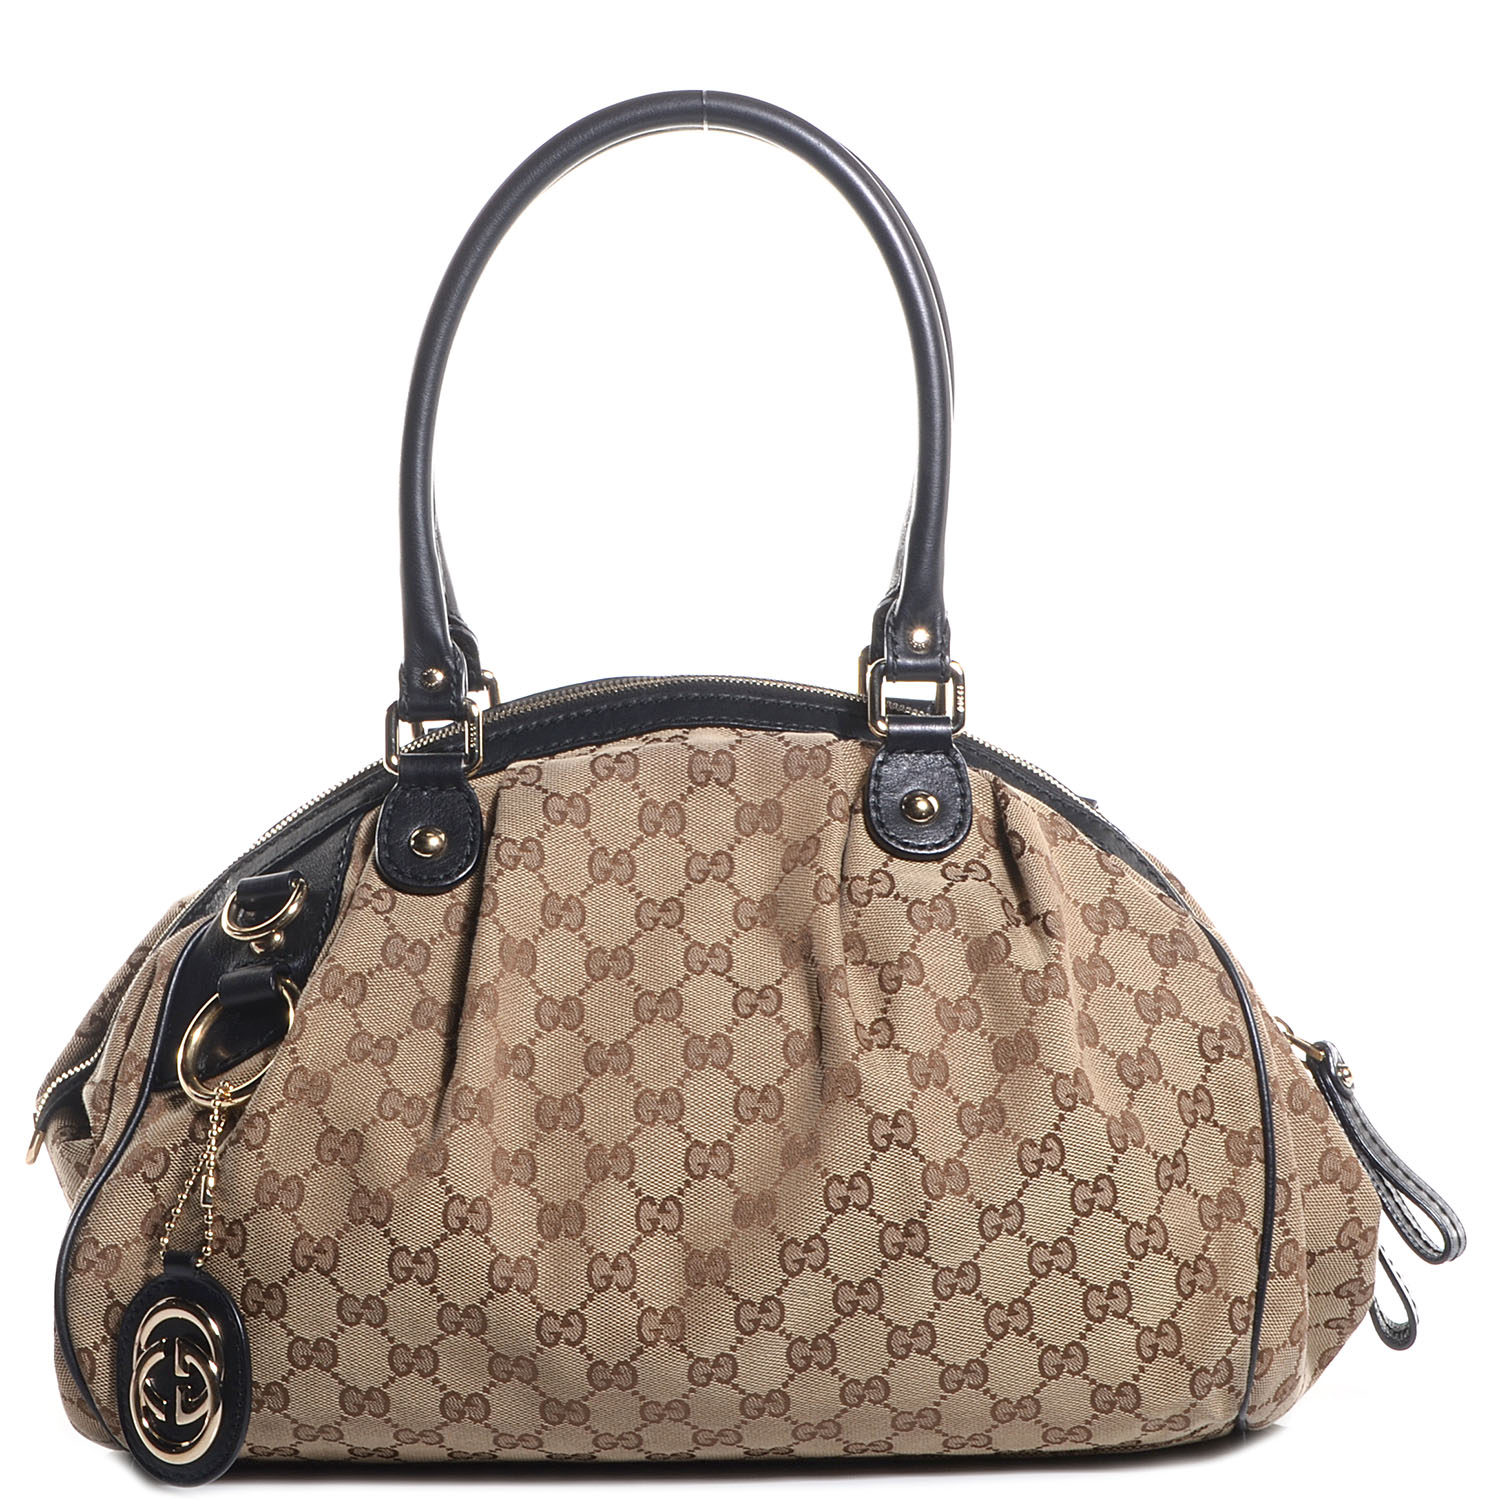 Gucci Handbag Black | semashow.com